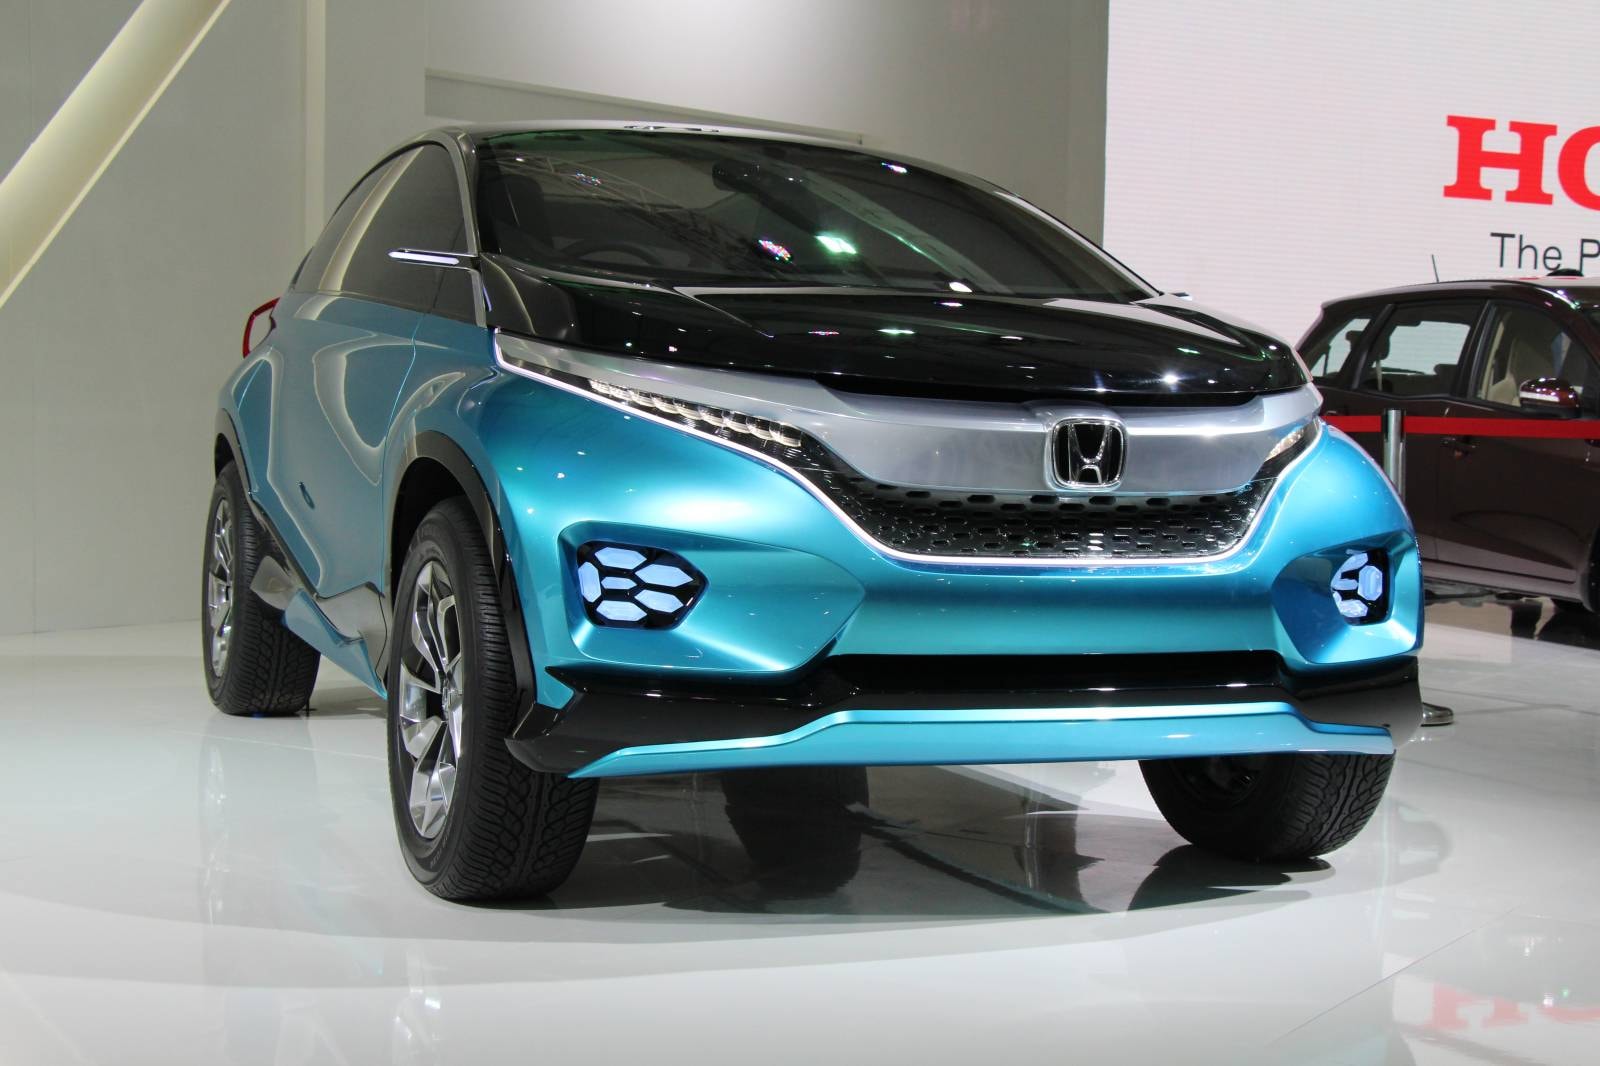 Honda XS1 Concept Unveiled at 2014 New Delhi Auto Expo